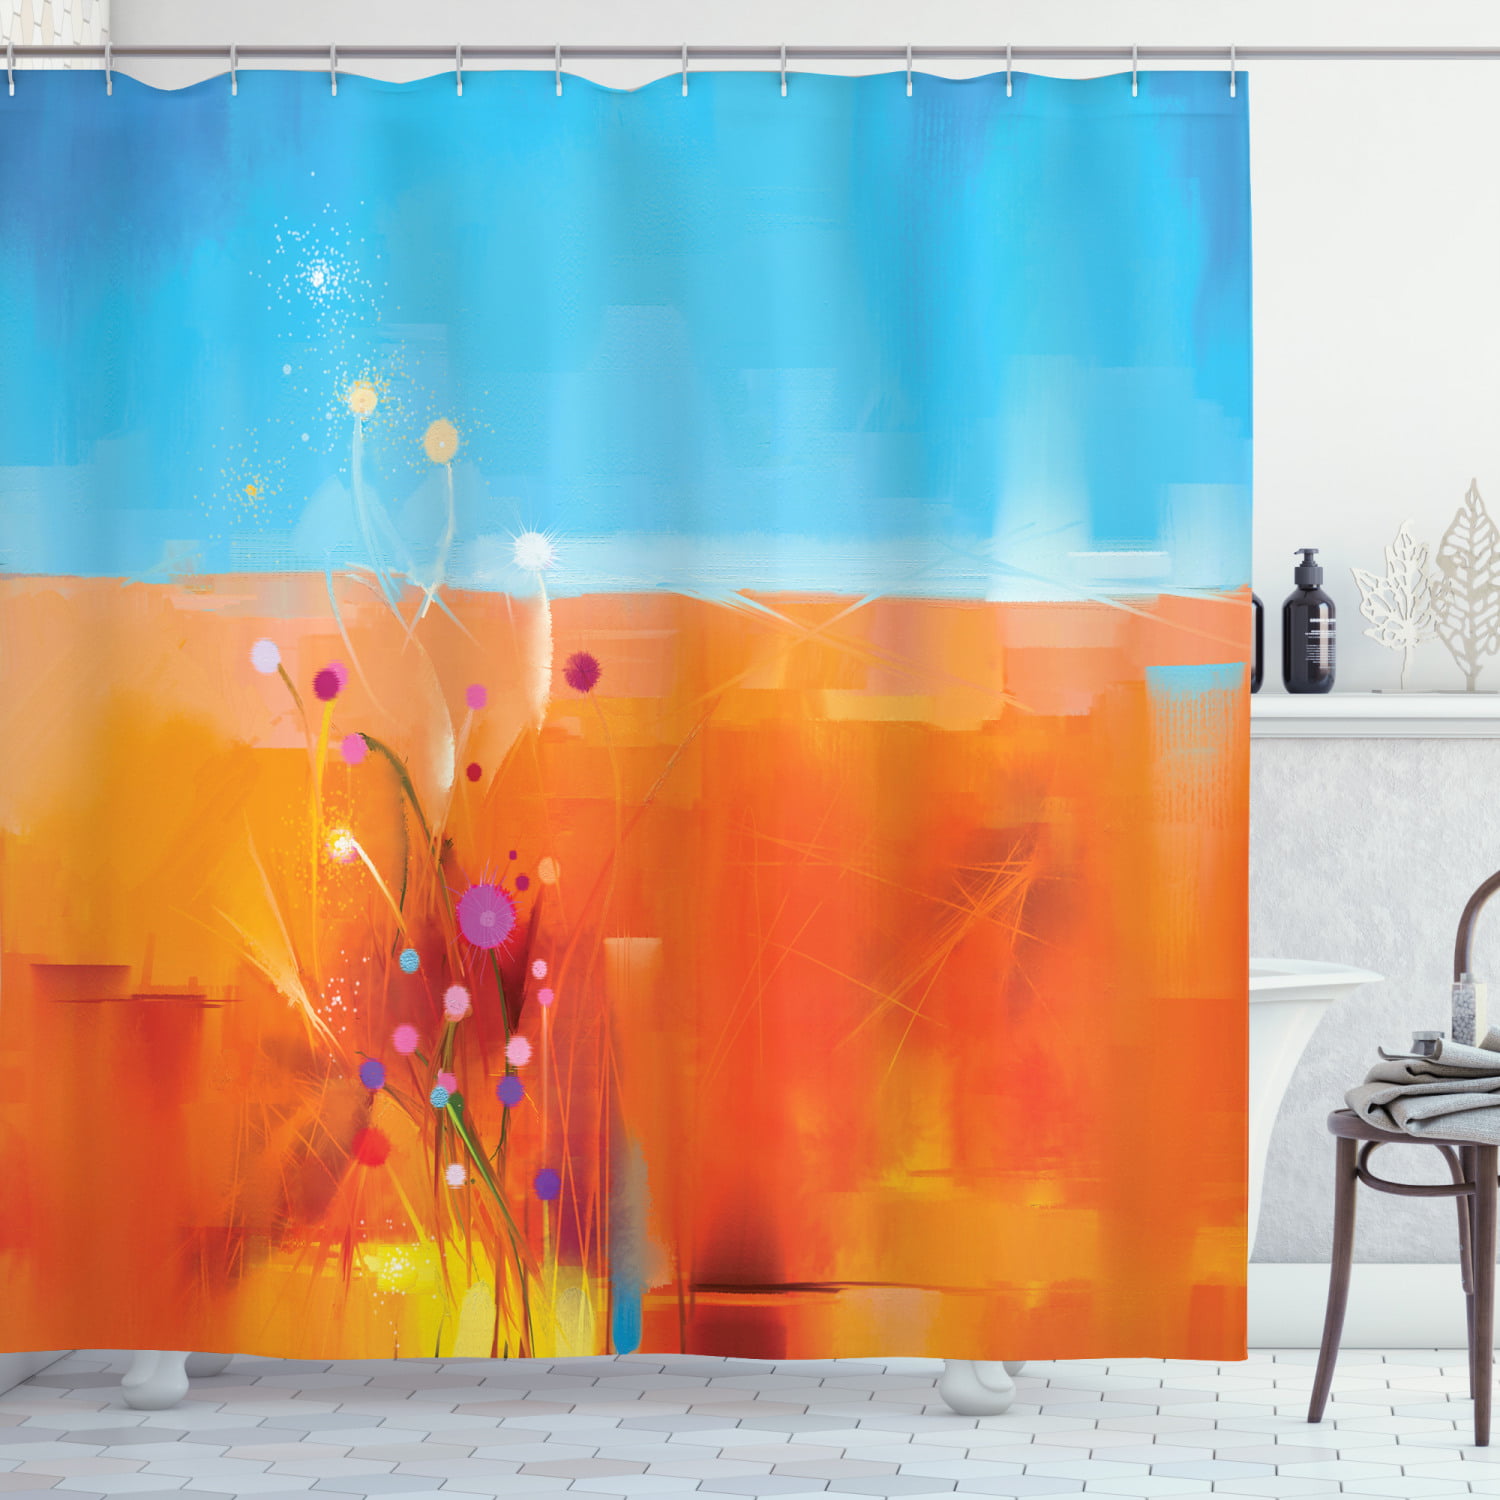 Details about   Vineyard Shower Curtain Cluster Ivy Fresh Print for Bathroom 